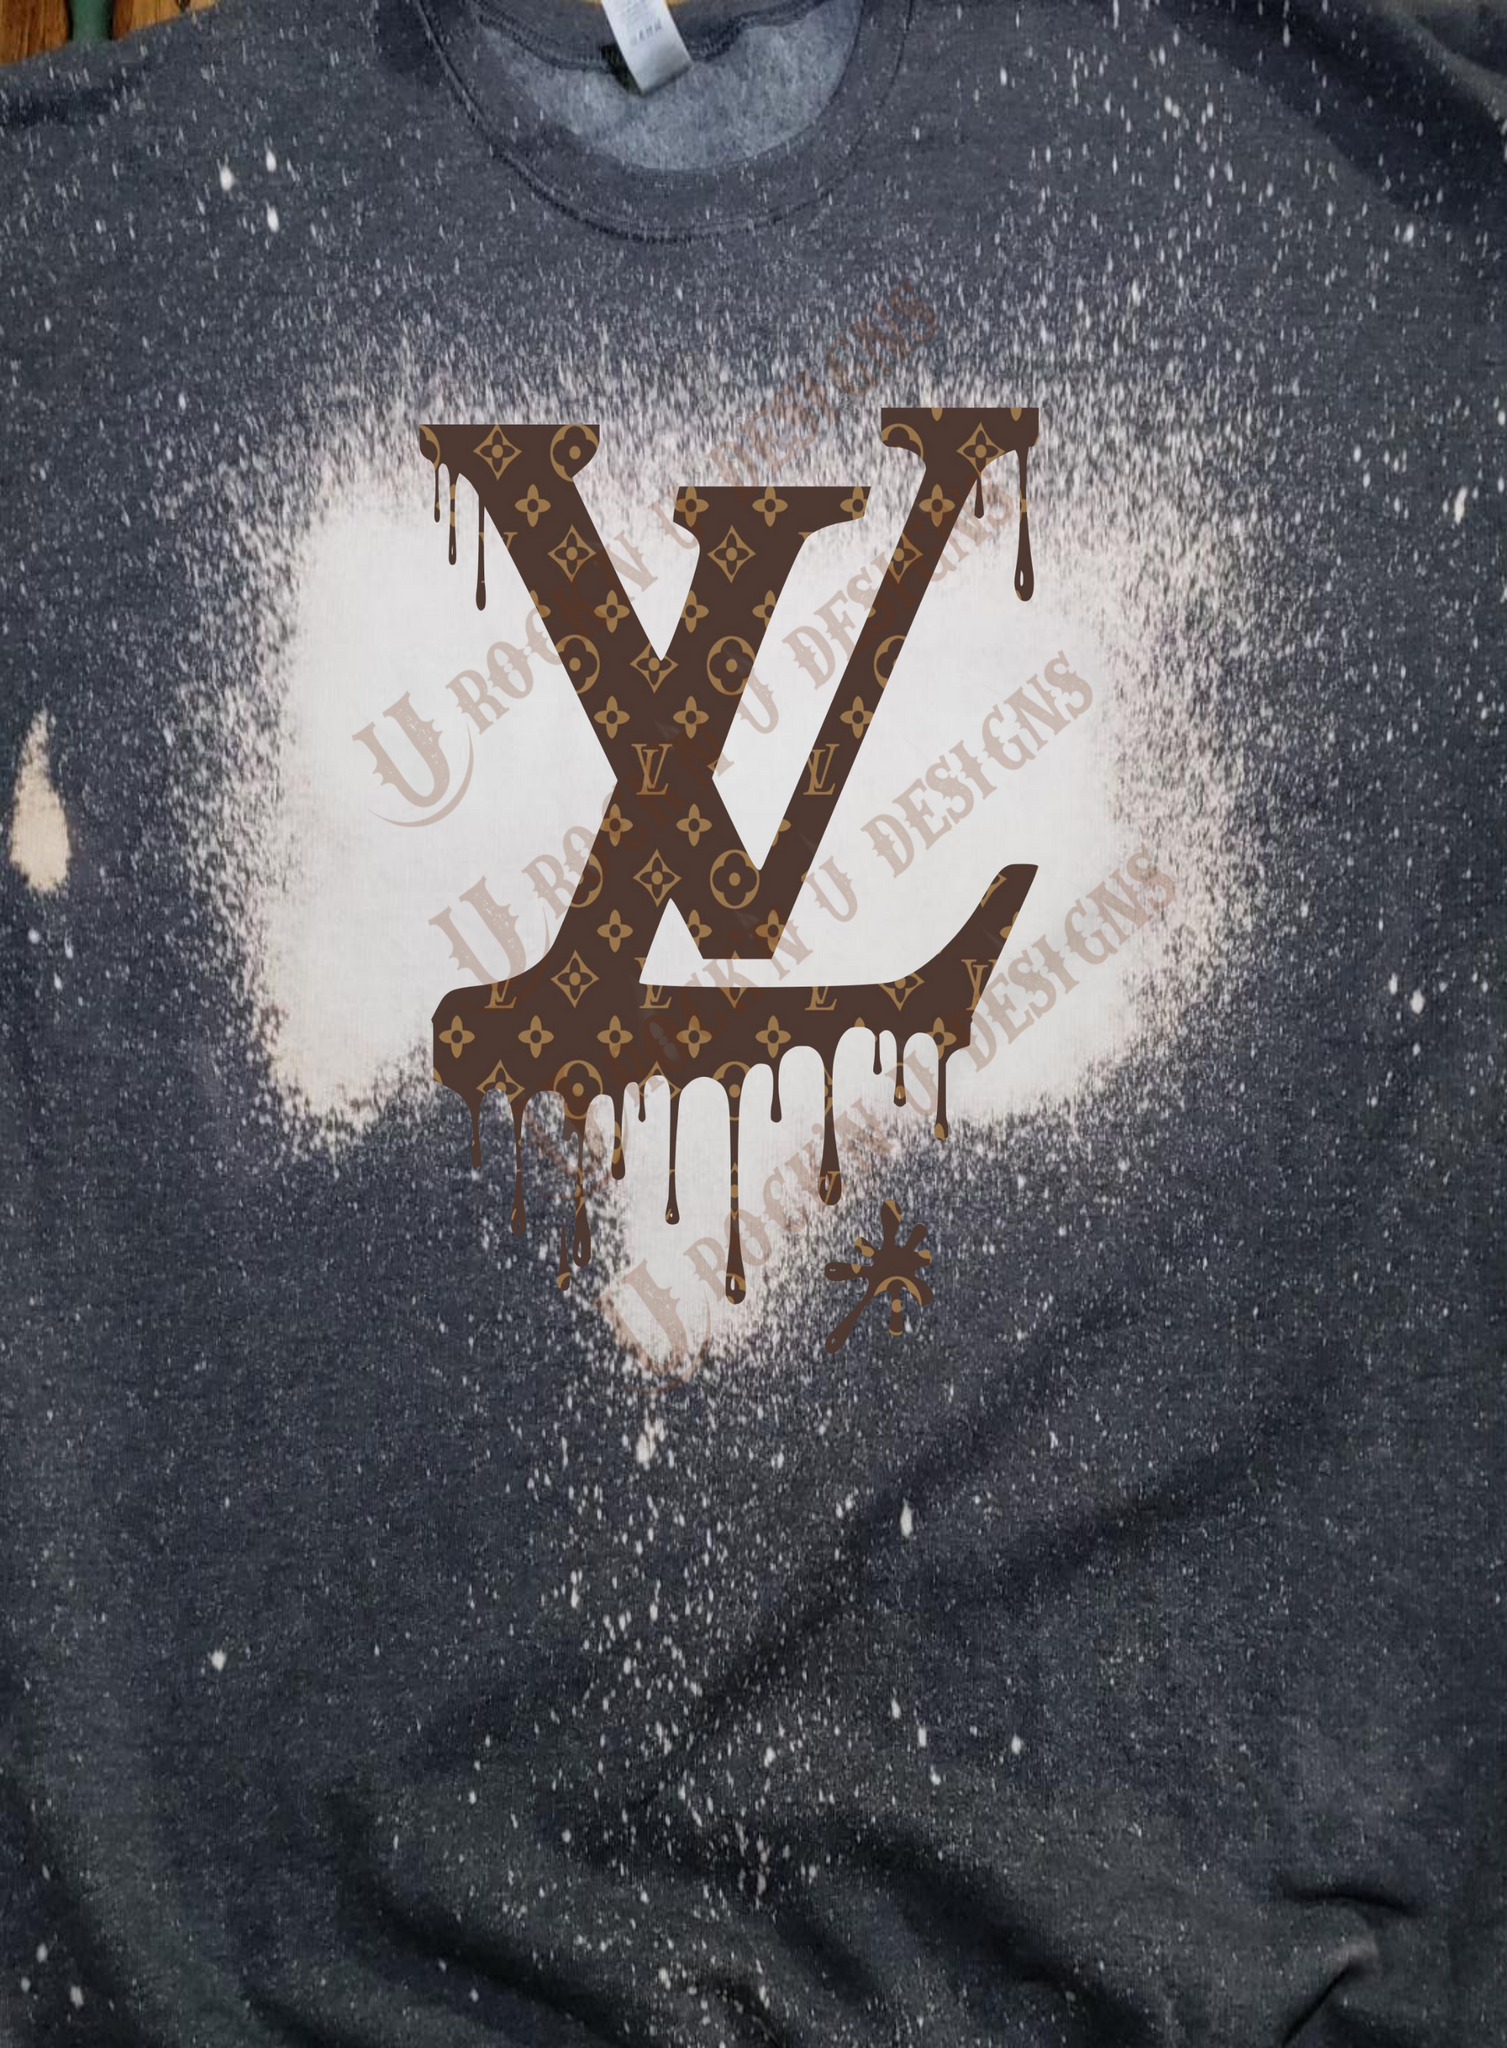 LV Drip T-shirt